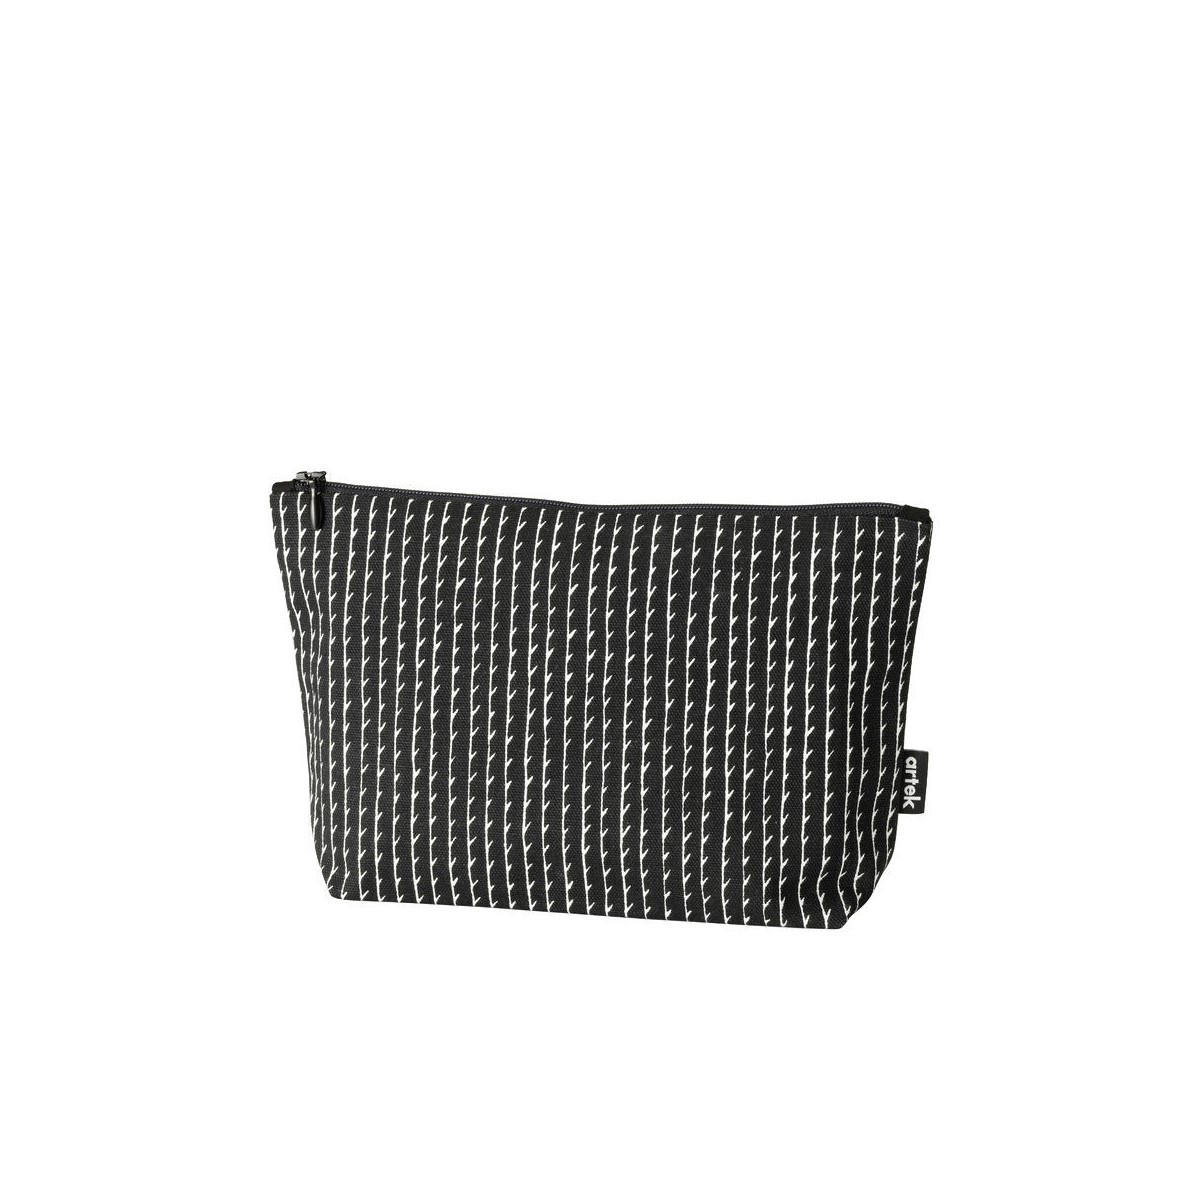 24x15cm - black / white - pouch - Rivi